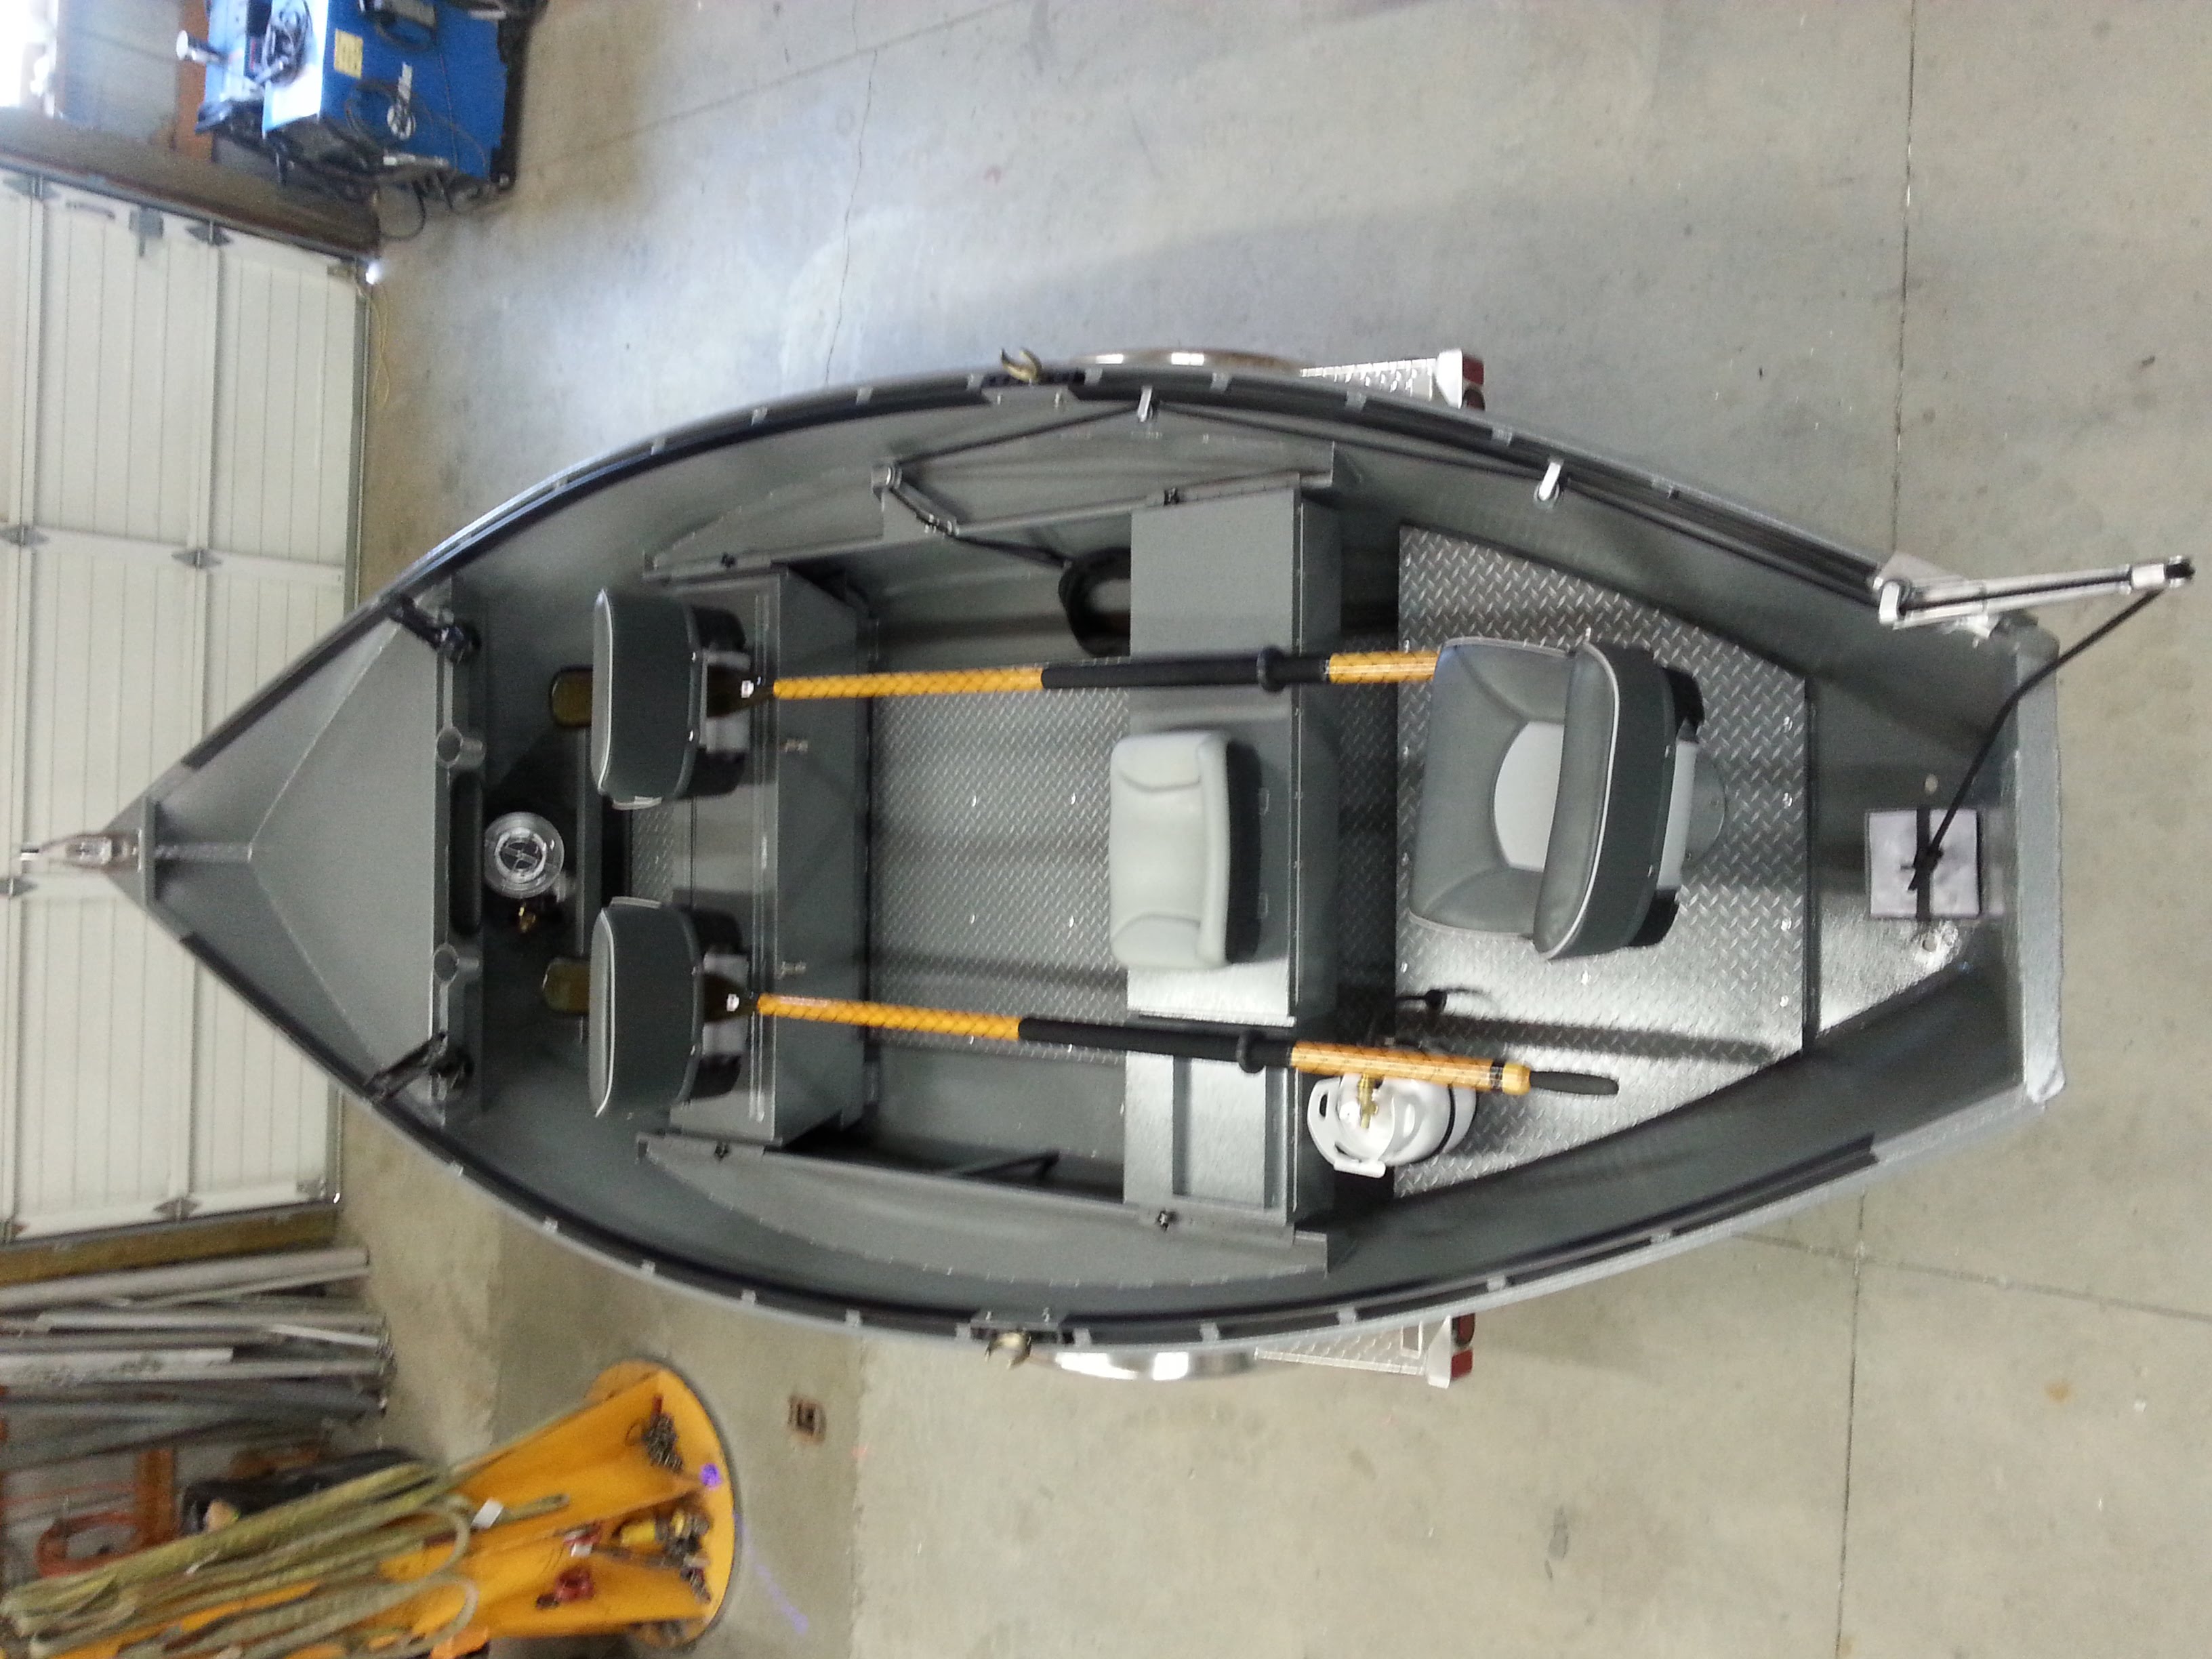 Standard Drift Boat Seats - Drift Boat Parts